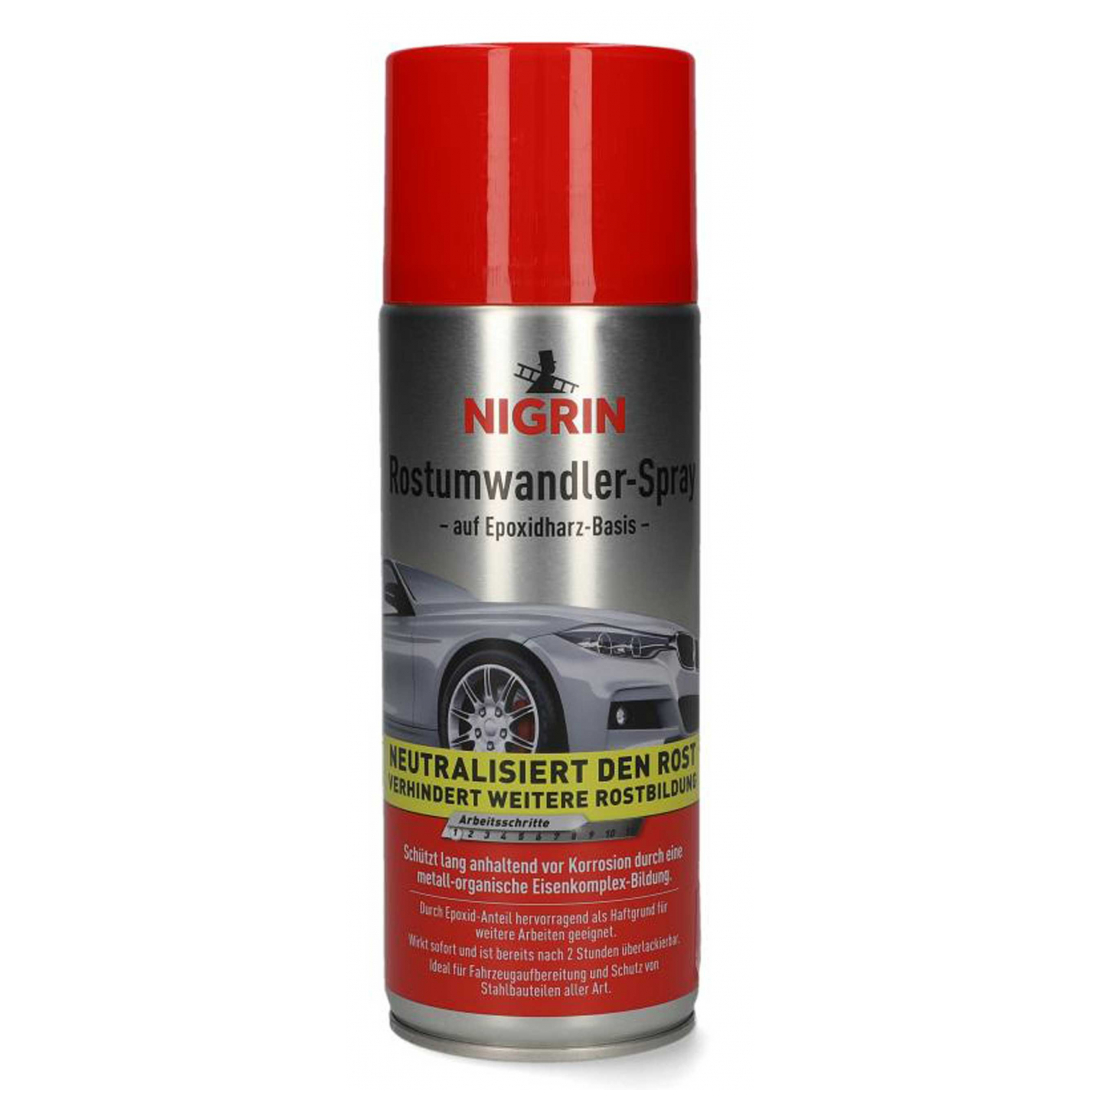 Nigrin Rostumwandler-Spray 74107 400 ml